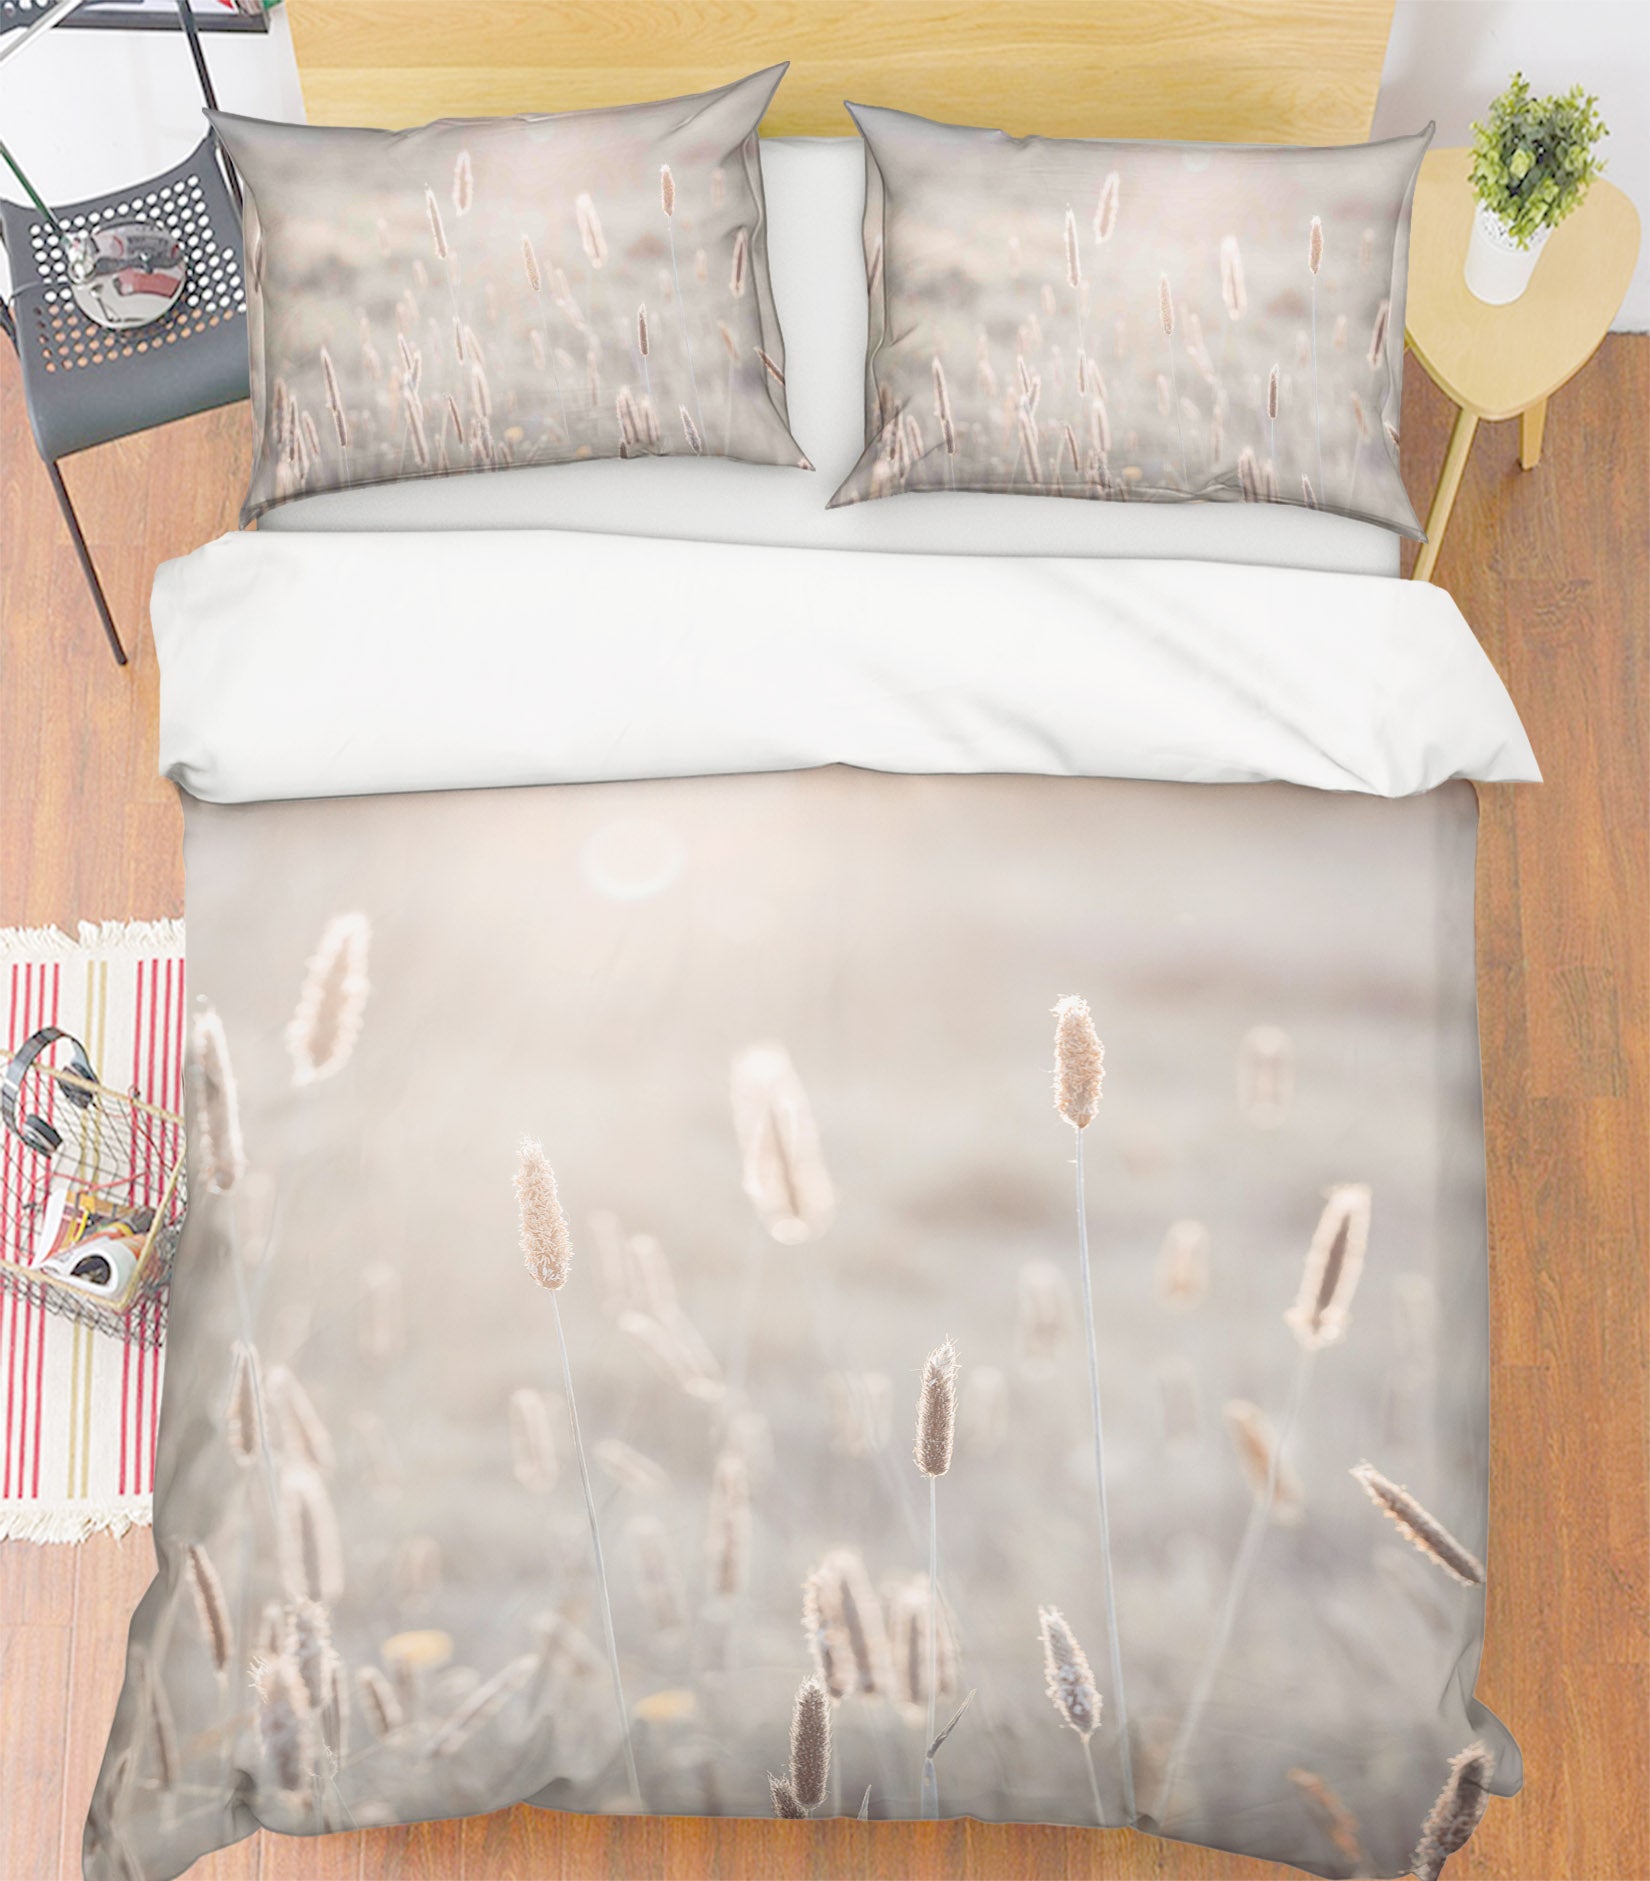 3D Morning Grass 7142 Assaf Frank Bedding Bed Pillowcases Quilt Cover Duvet Cover